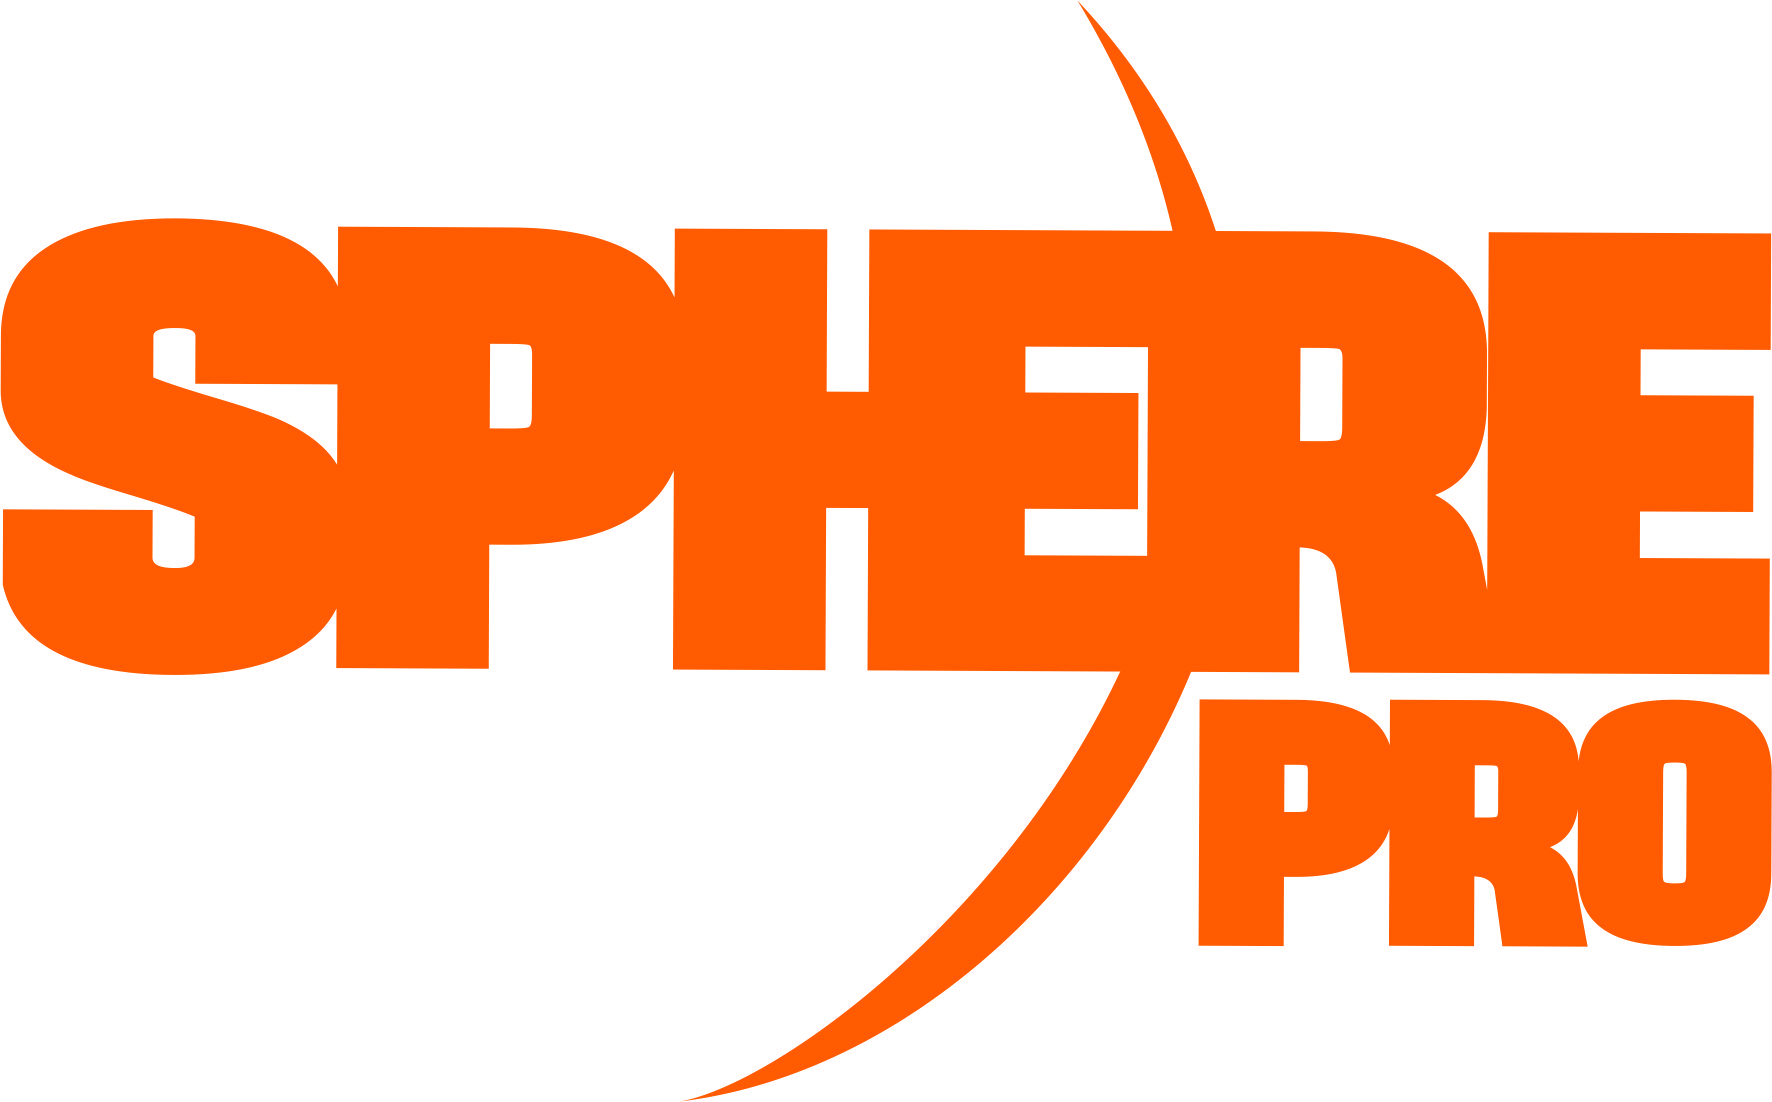 SPHERE PRO sphere pro logo[1] logo marki